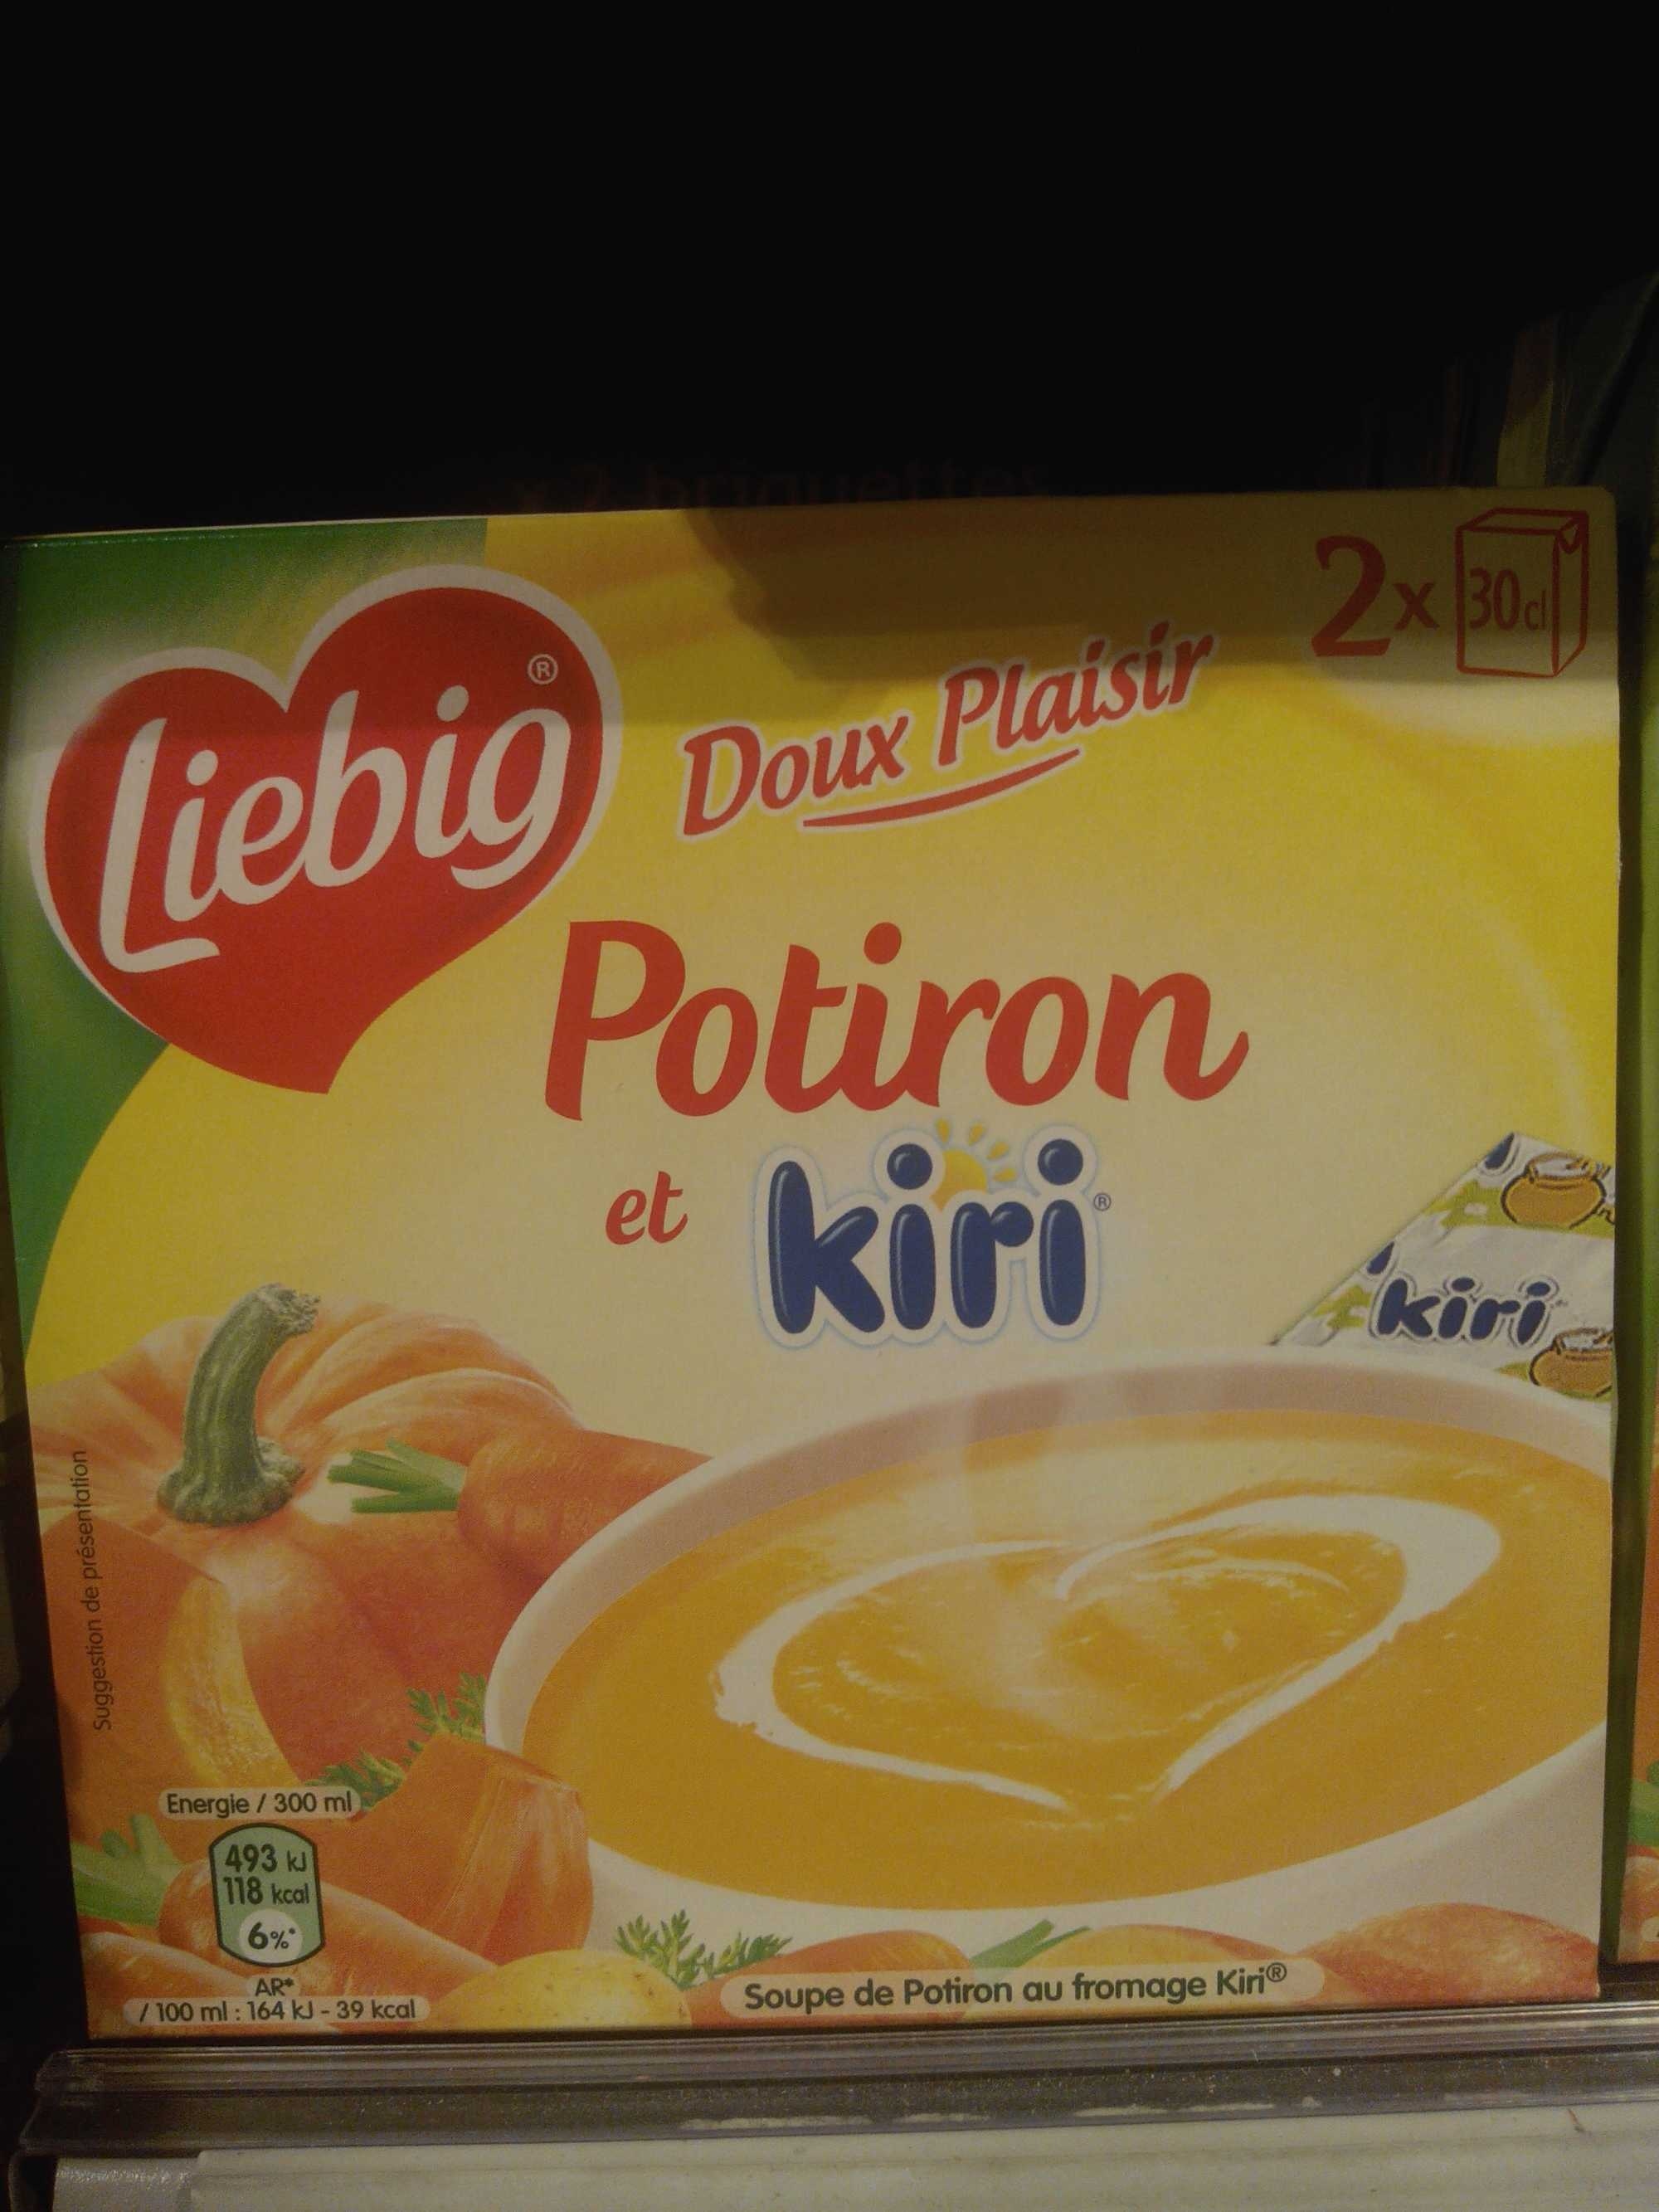 Doux Plaisir Potiron et Kiri - Product - fr